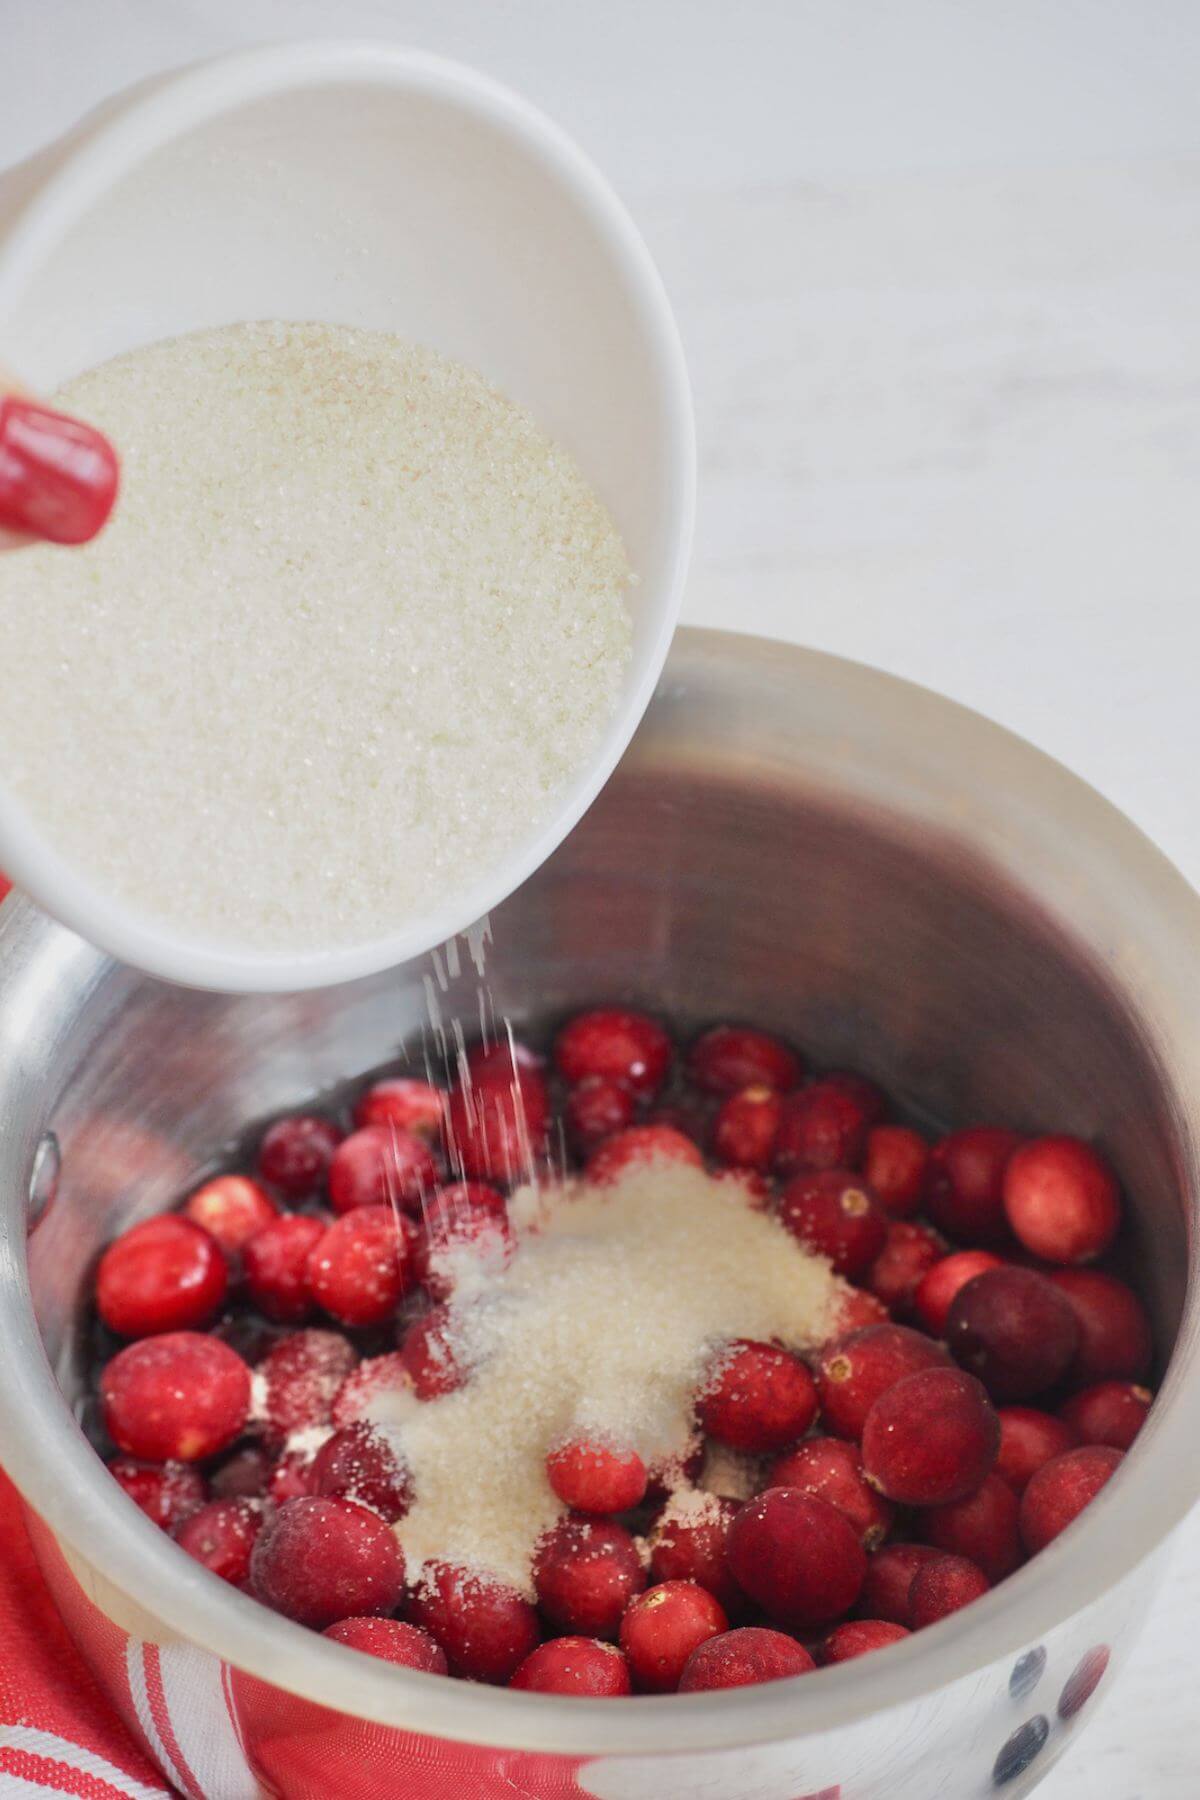 Adding sugar, orange juice and lemon juice to cranberries to make homemade cranberry sauce.